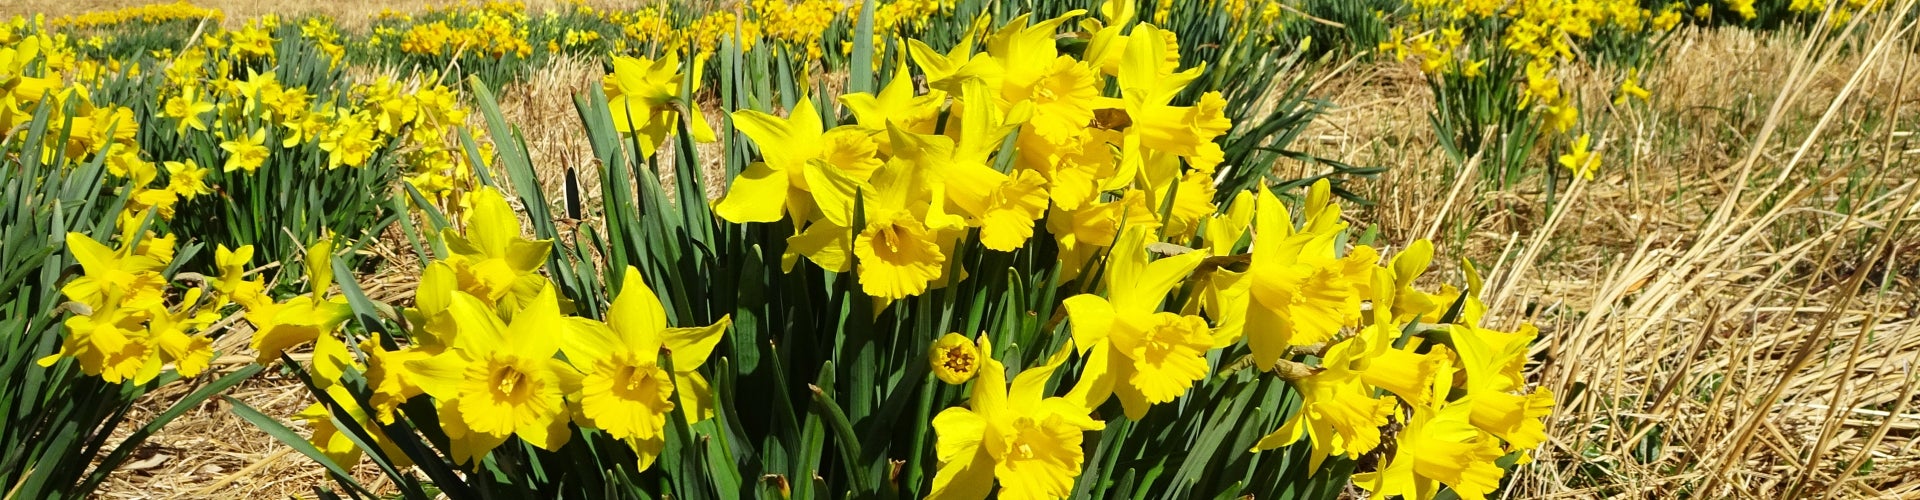 Narcissus spp. (daffodils)